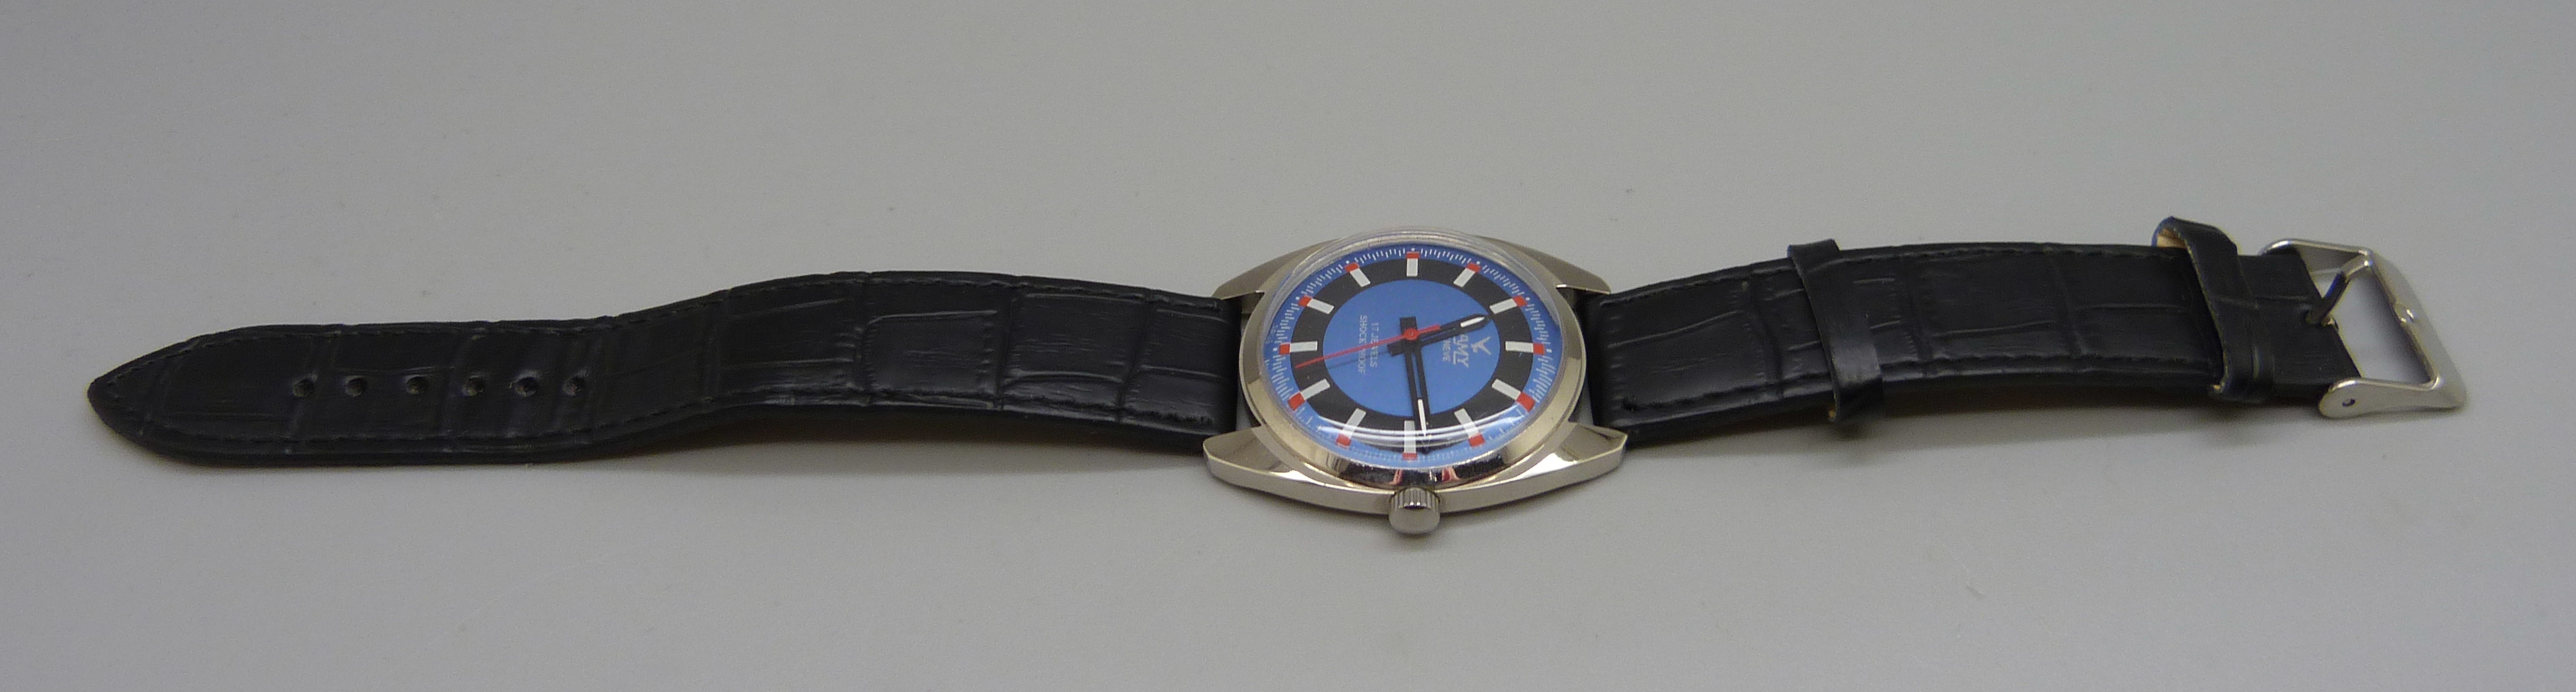 A Camy Geneve wristwatch - Image 5 of 5